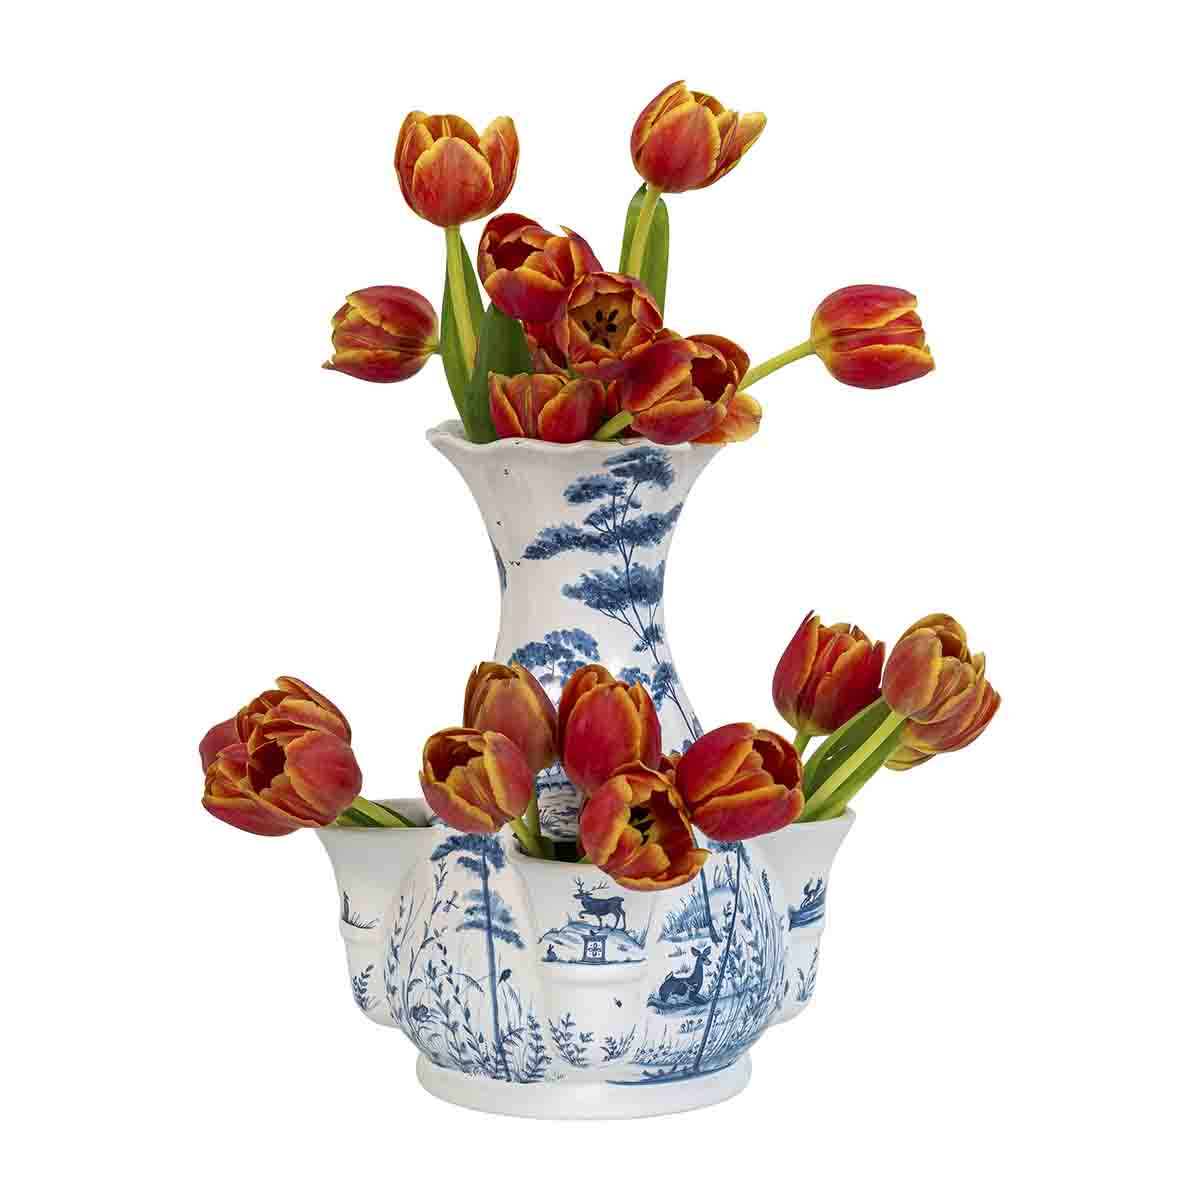 Country Estate 11.5" Tulipiere Vase - Delft Blue | 2nd